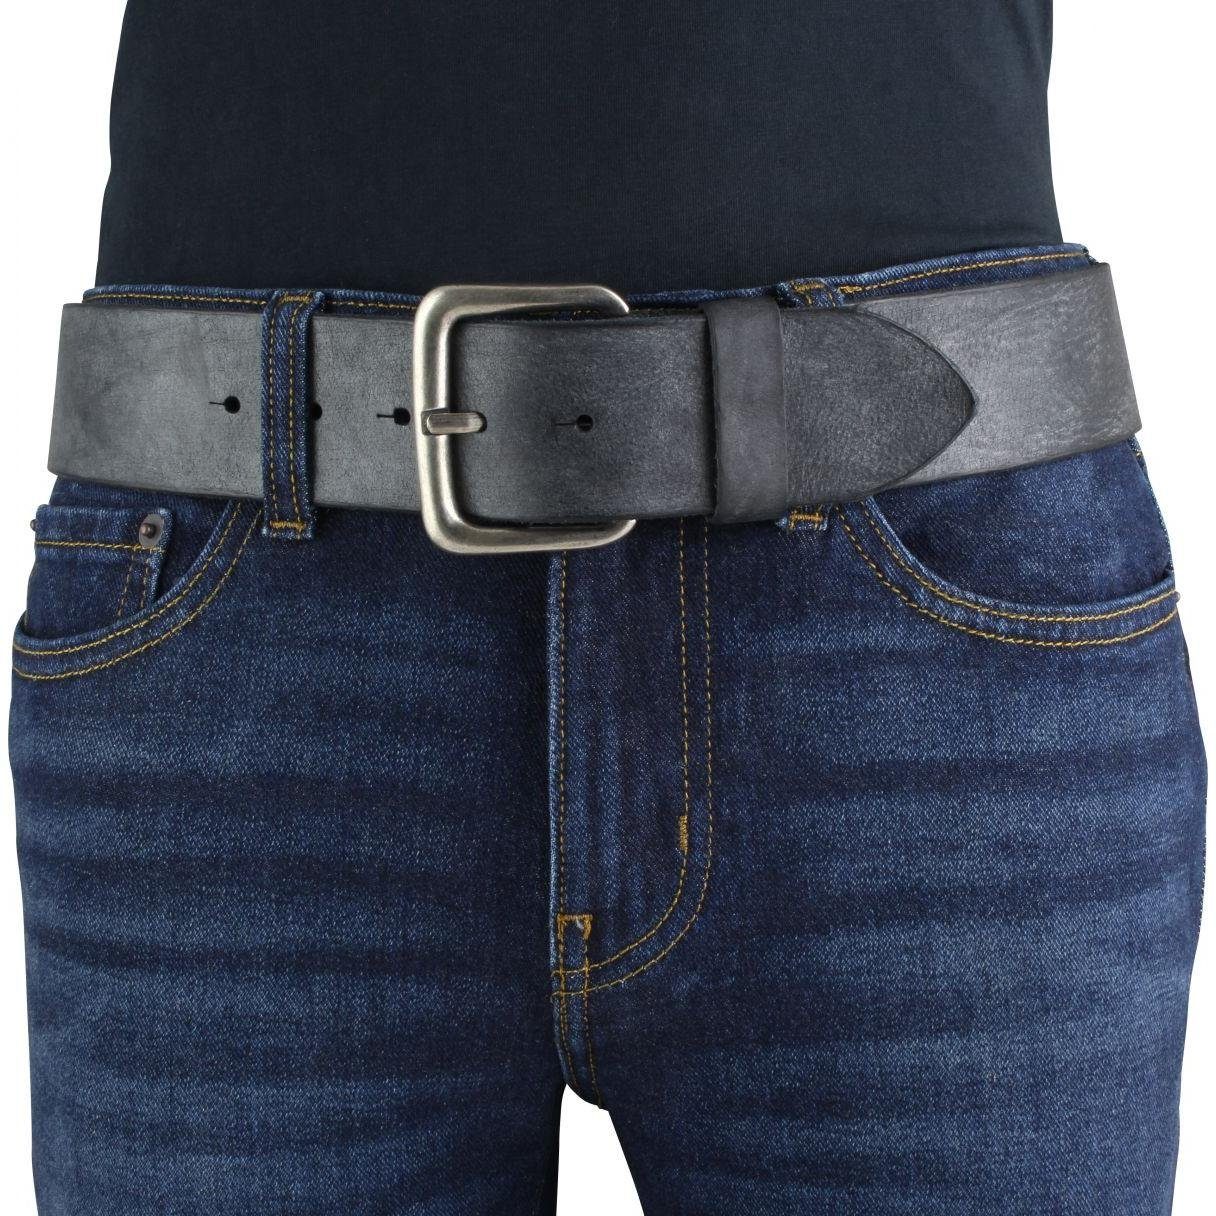 BELTINGER Ledergürtel Gürtel mit - aus Jeans-Gürtel cm Vollrindleder mas weichem Used-Look Dunkelgrau, 5 Altsilber